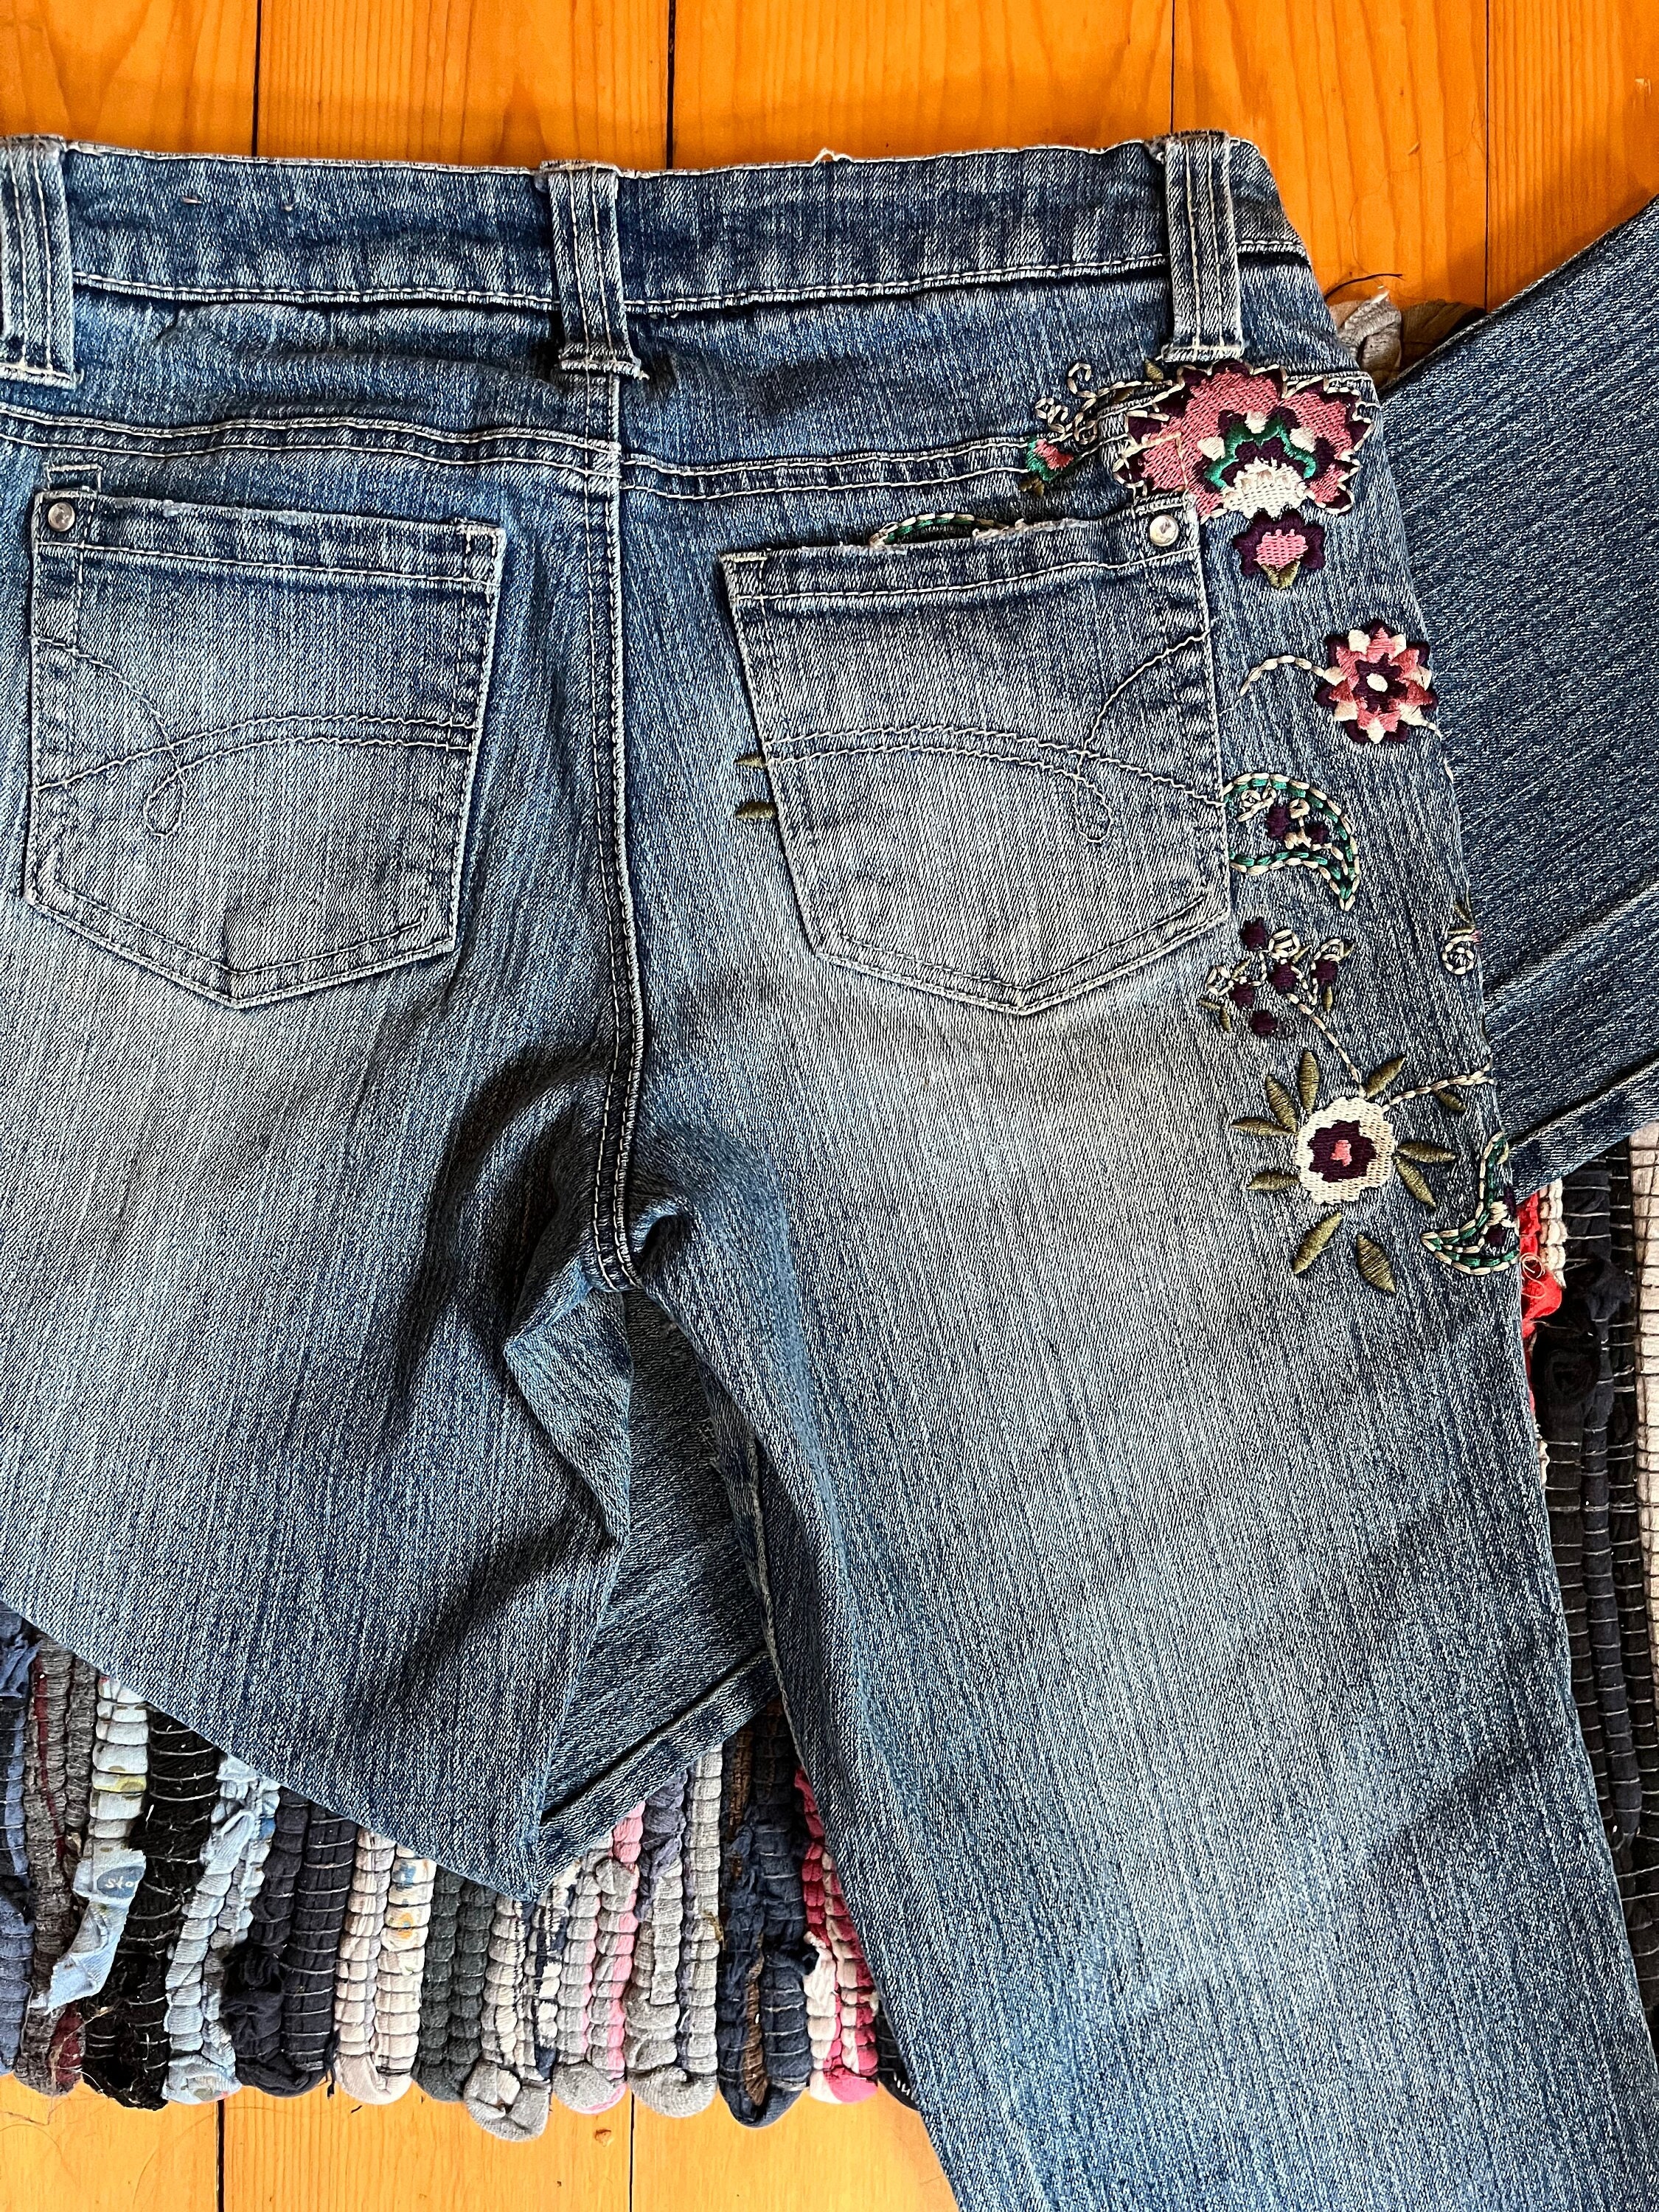 Earl Jeans Women's Slim Boot Light Wash Bling Back Pockets Size